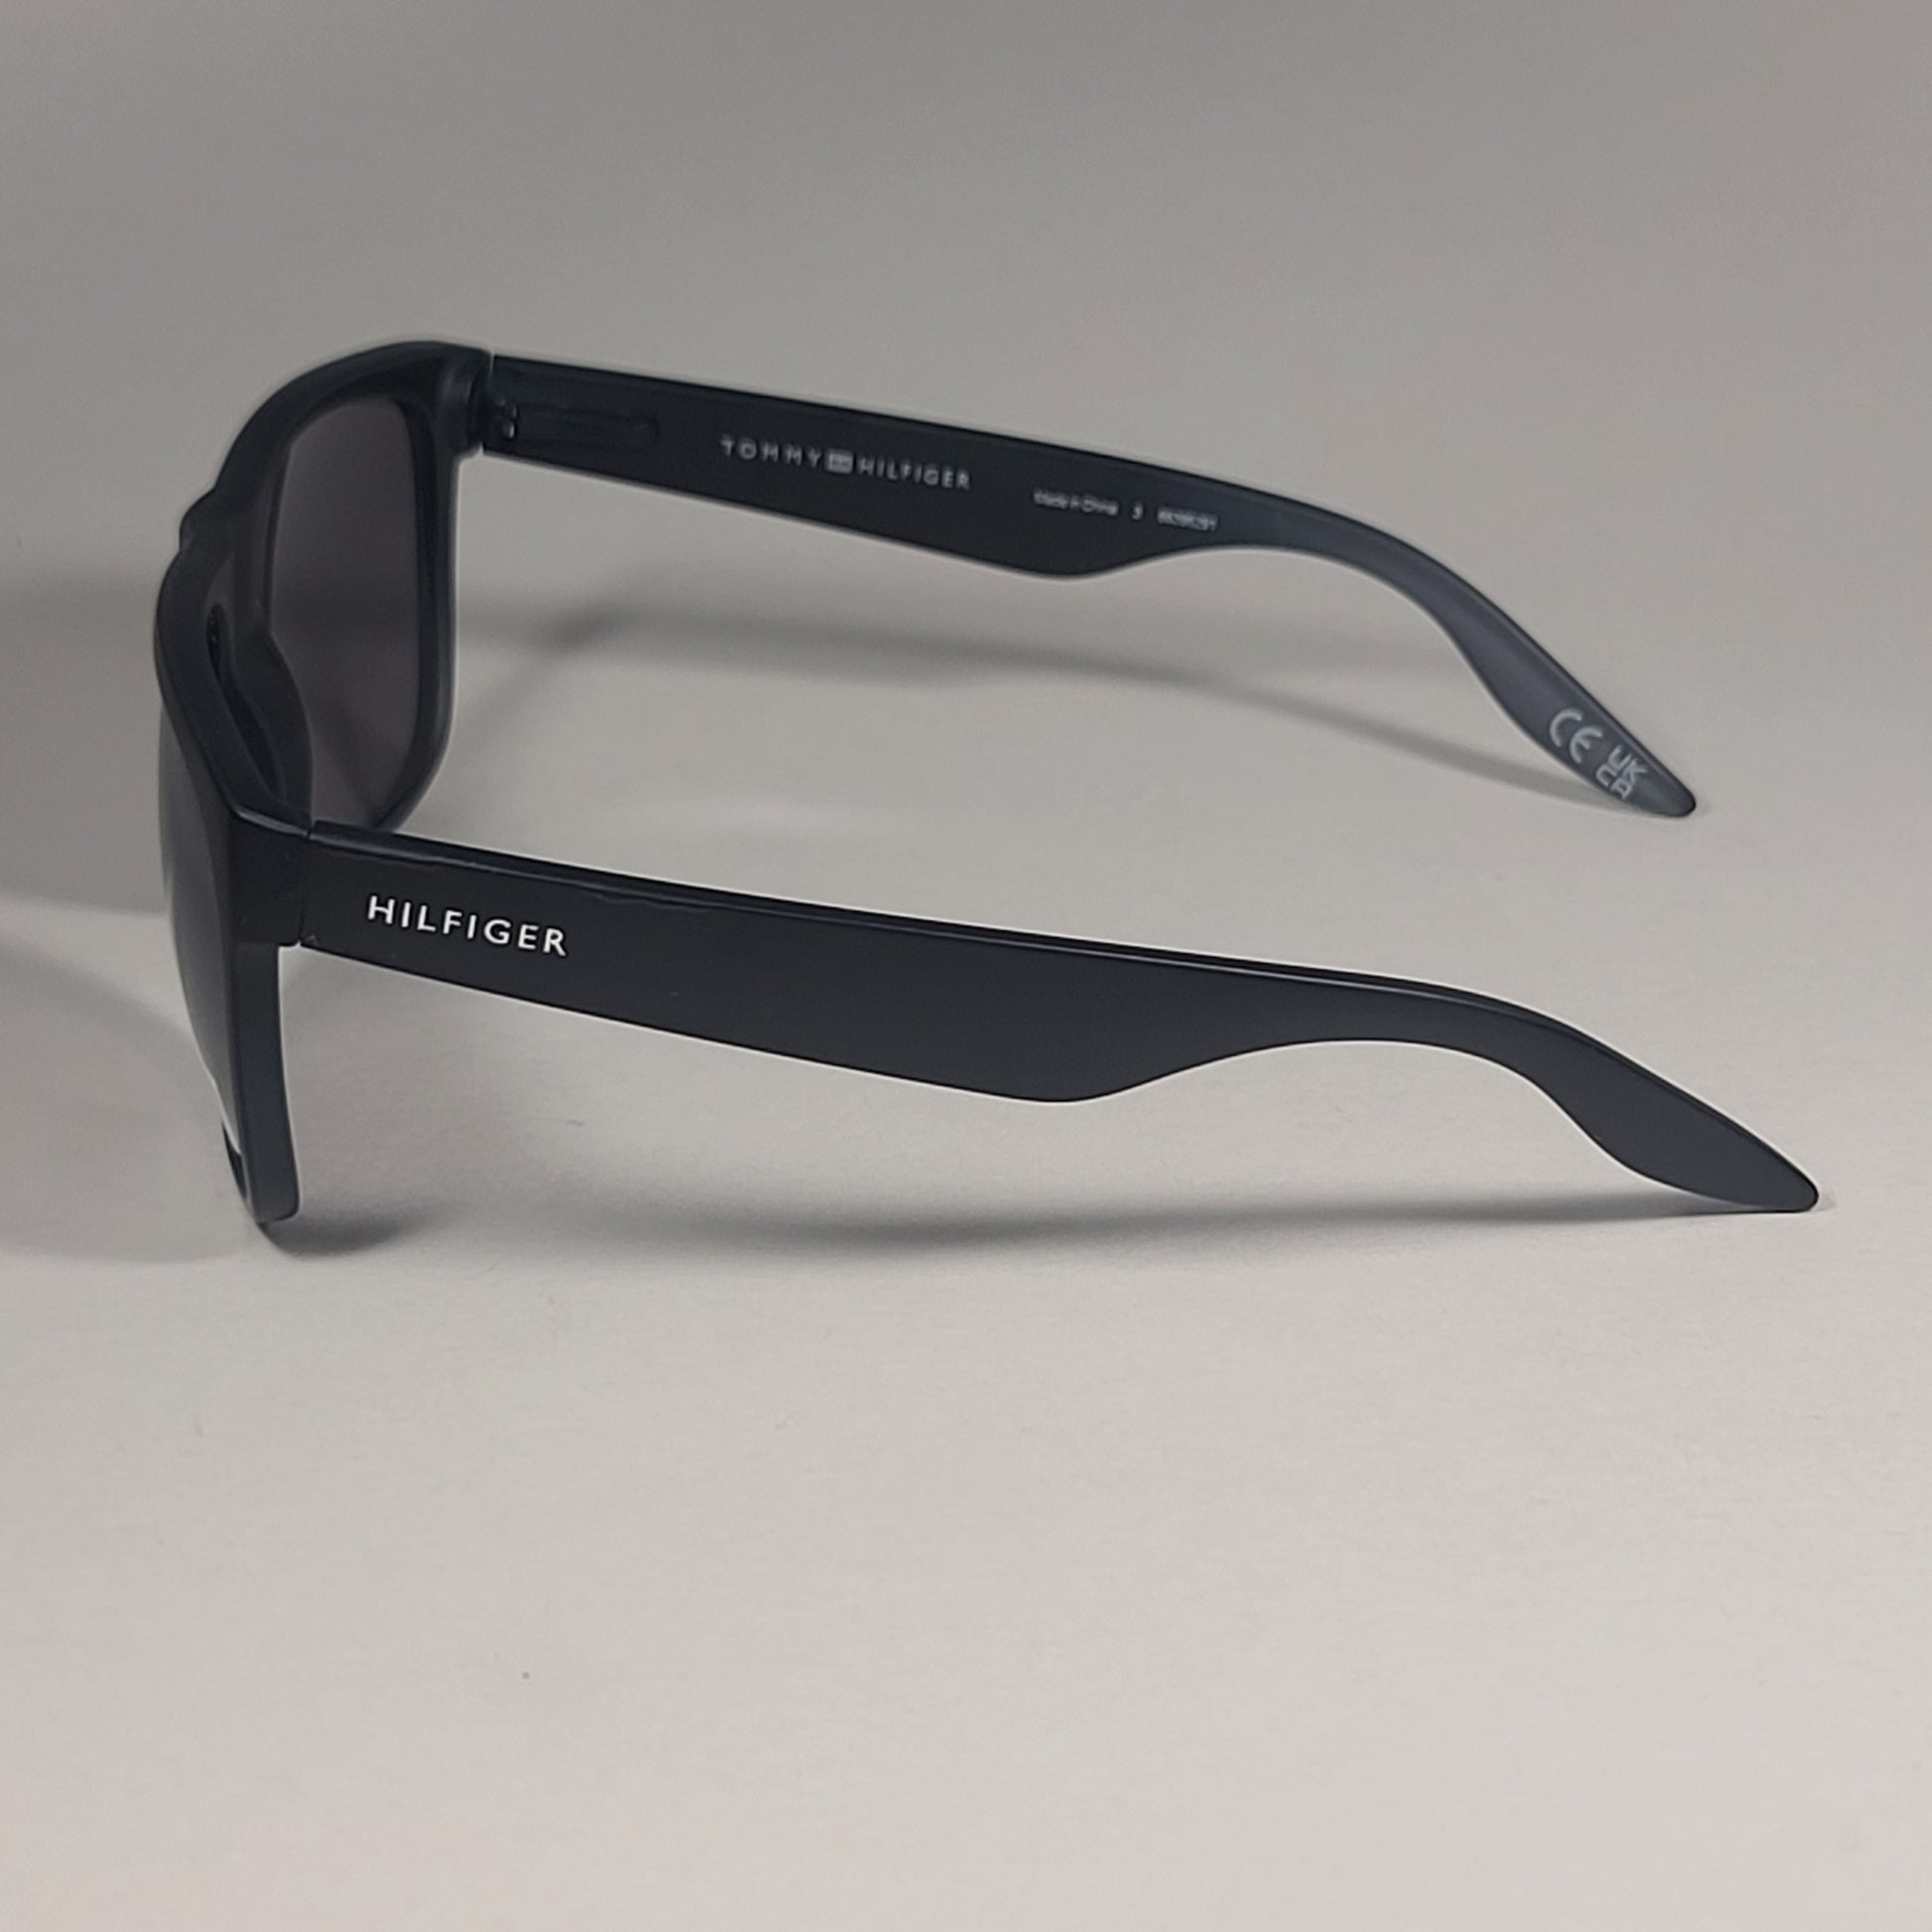 Tommy Hilfiger ’Tanner’ MP OM302 Square Sunglasses Matte Black Silver Mirror 57mm - Sunglasses